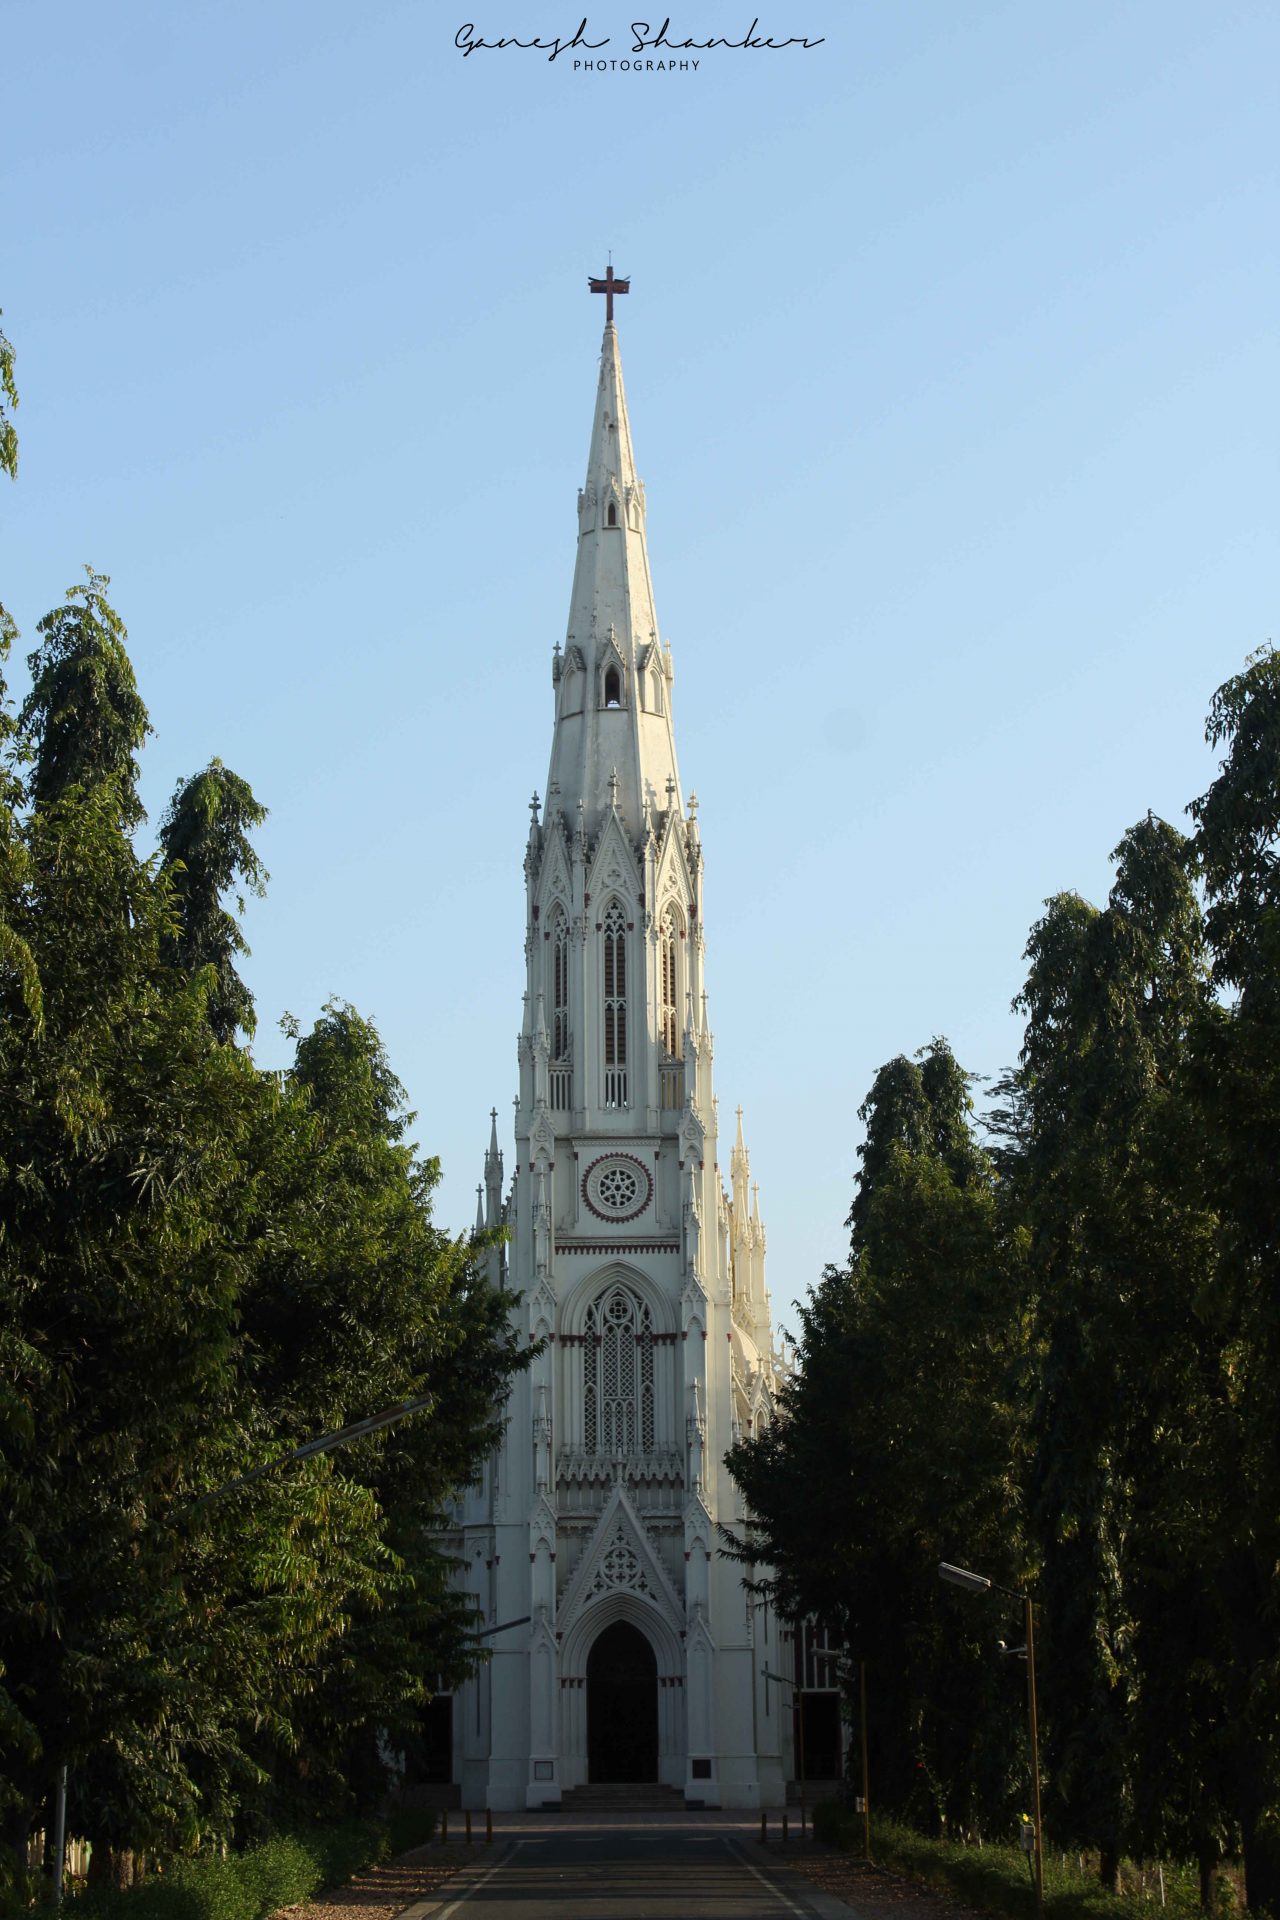 loyola-college-chennai-architecture-ganesh-shanker-kk